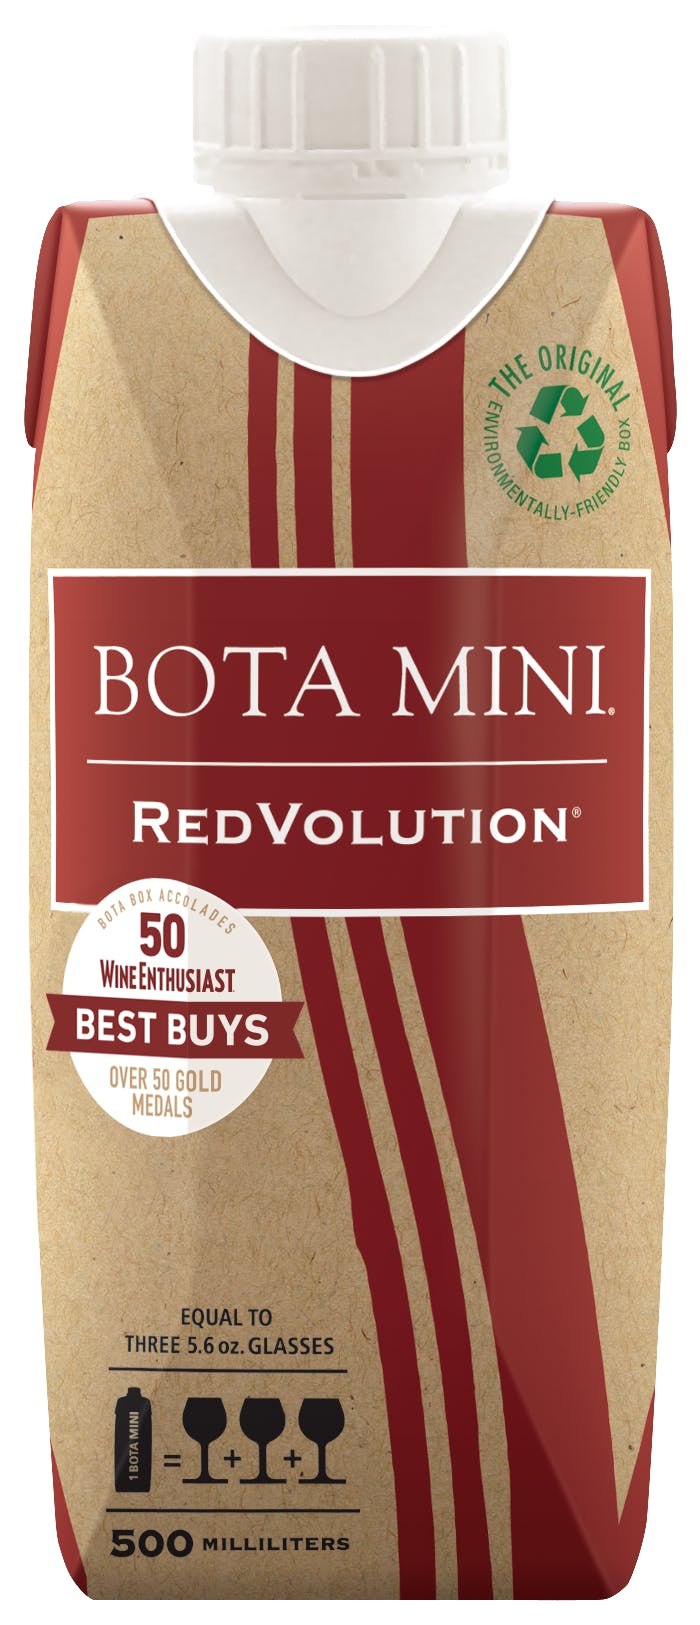 bota-box-redvolution-500ml-tetra-pak-stirling-fine-wines